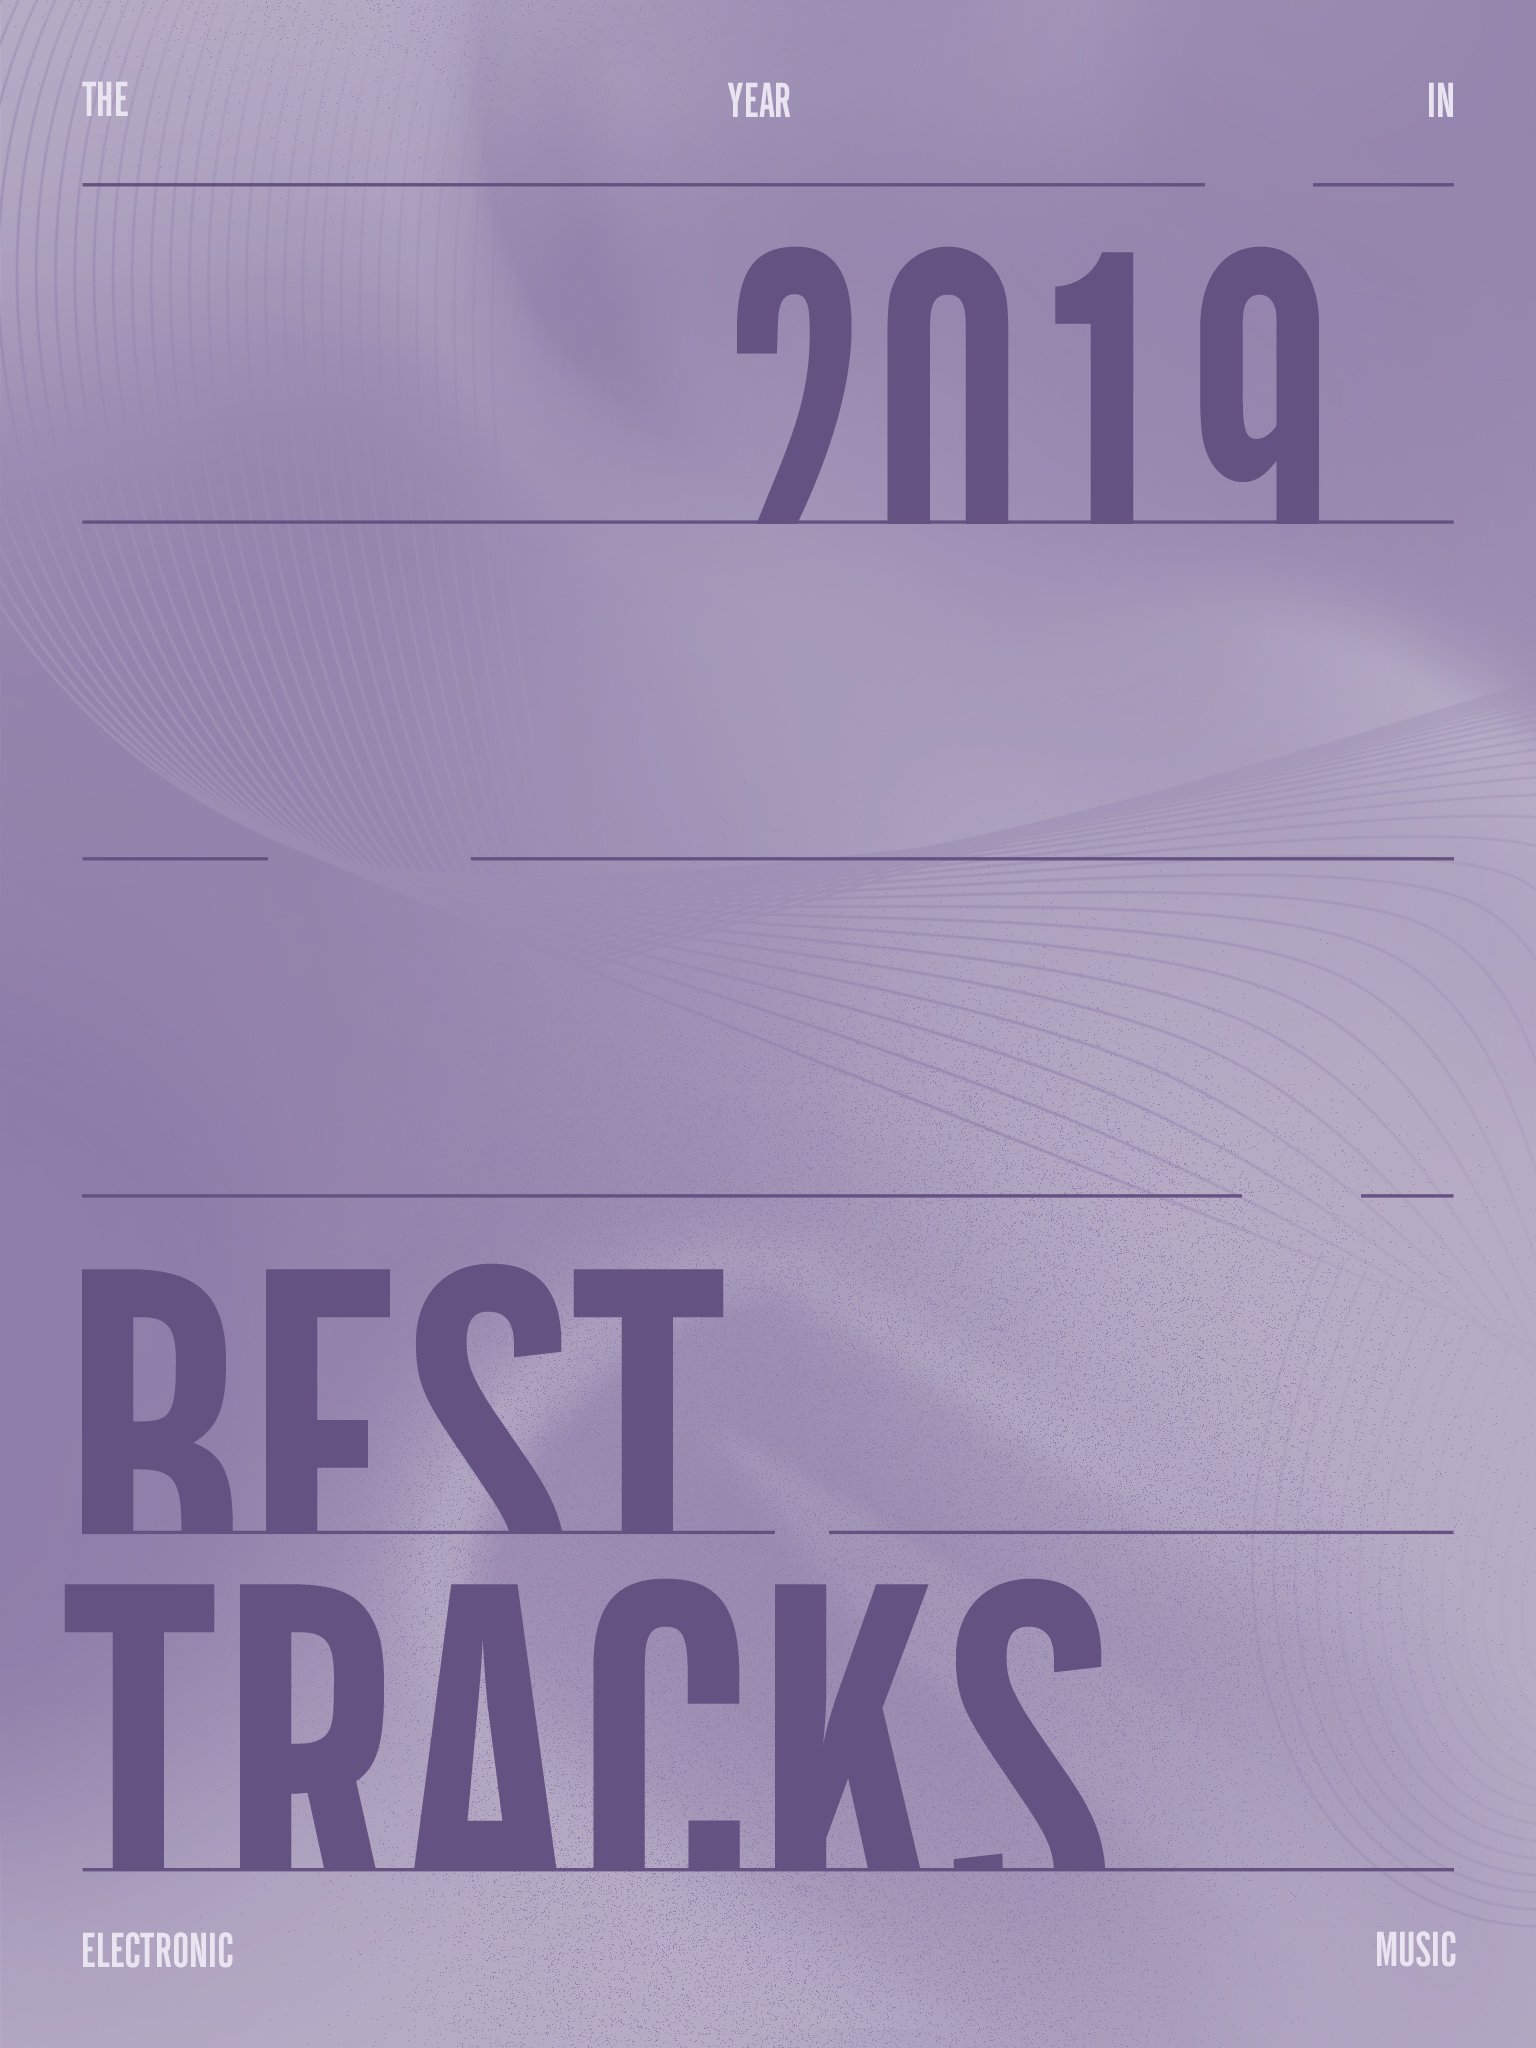 Ra 2019 S Best Tracks